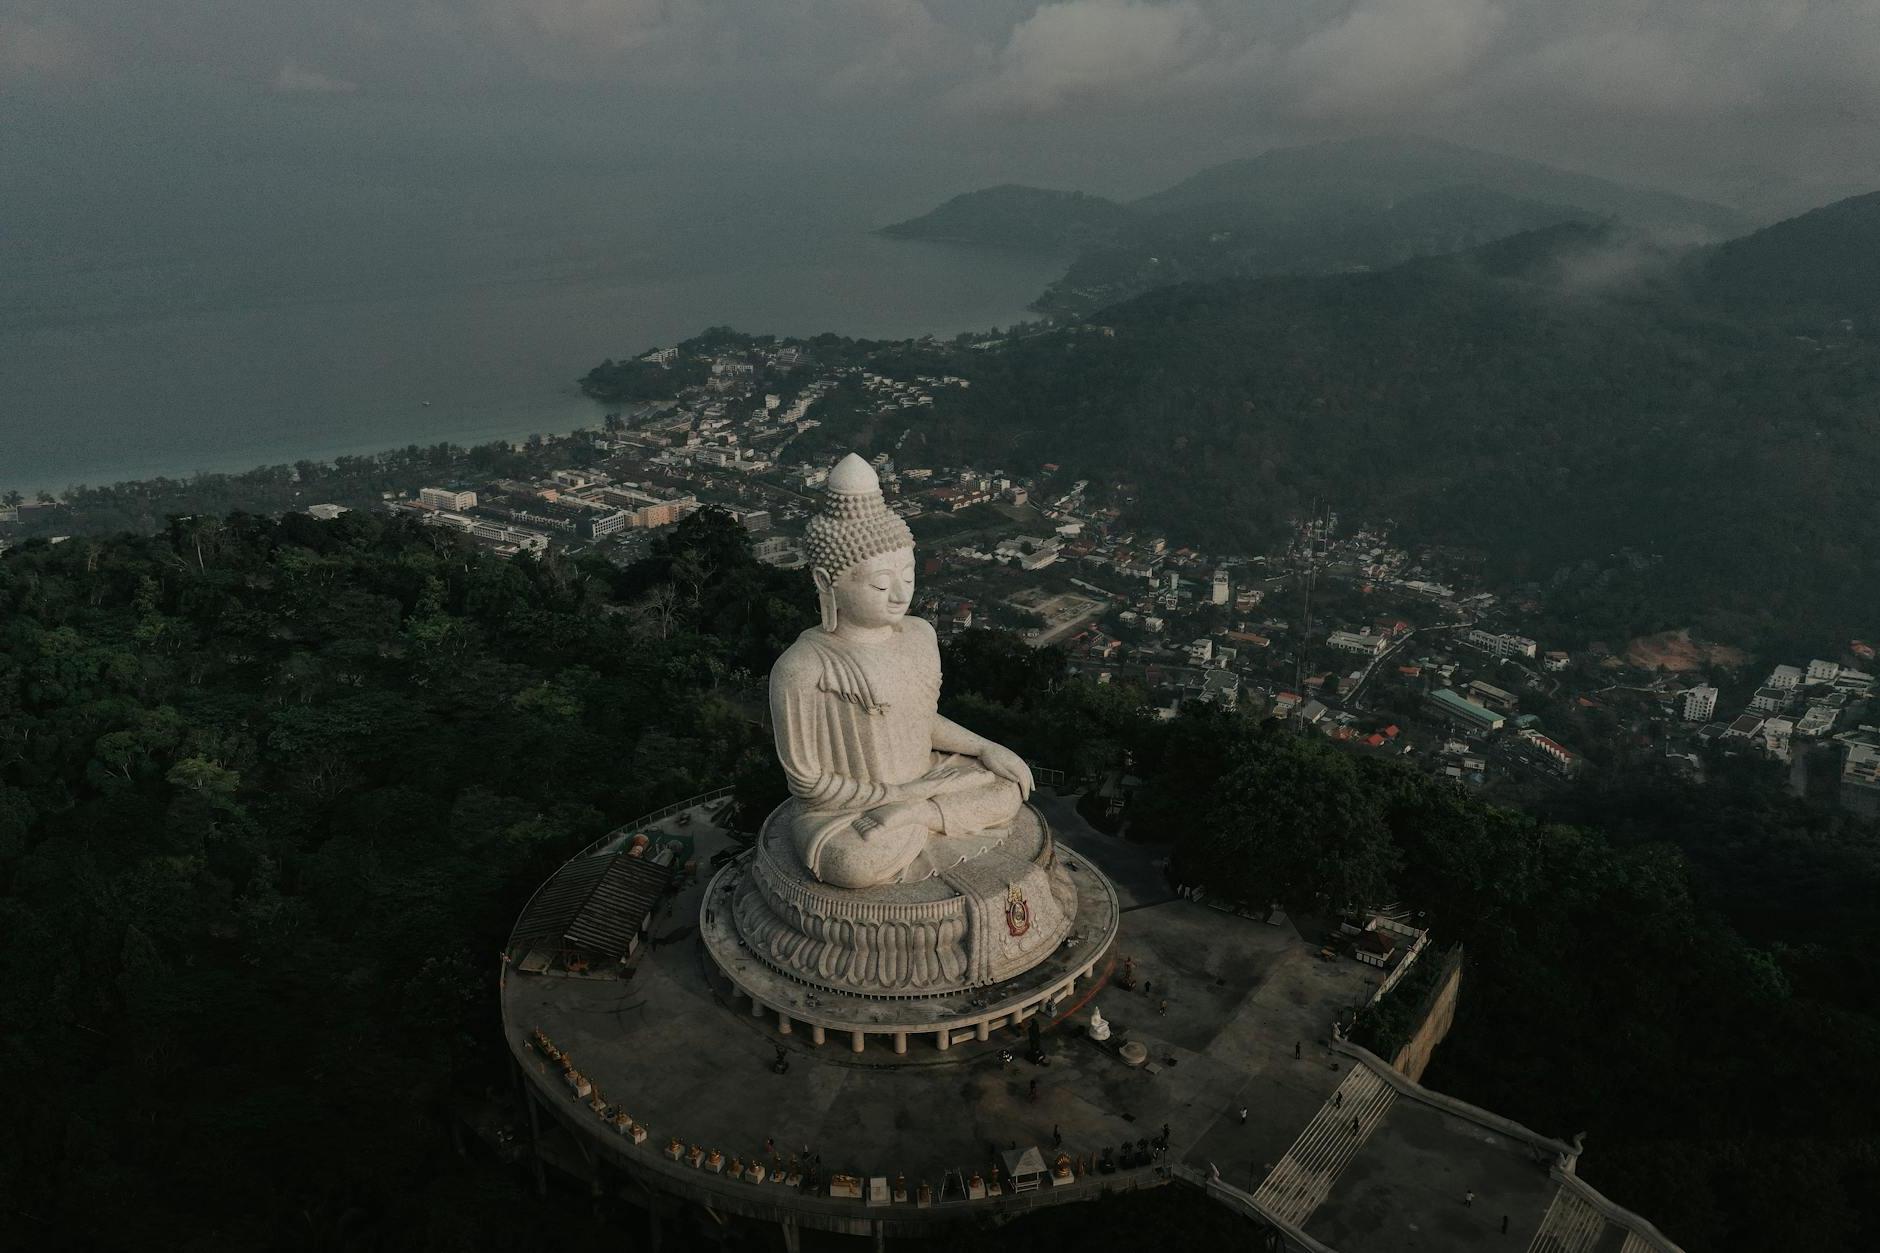 The Big Buddha in Phuket in Thailand